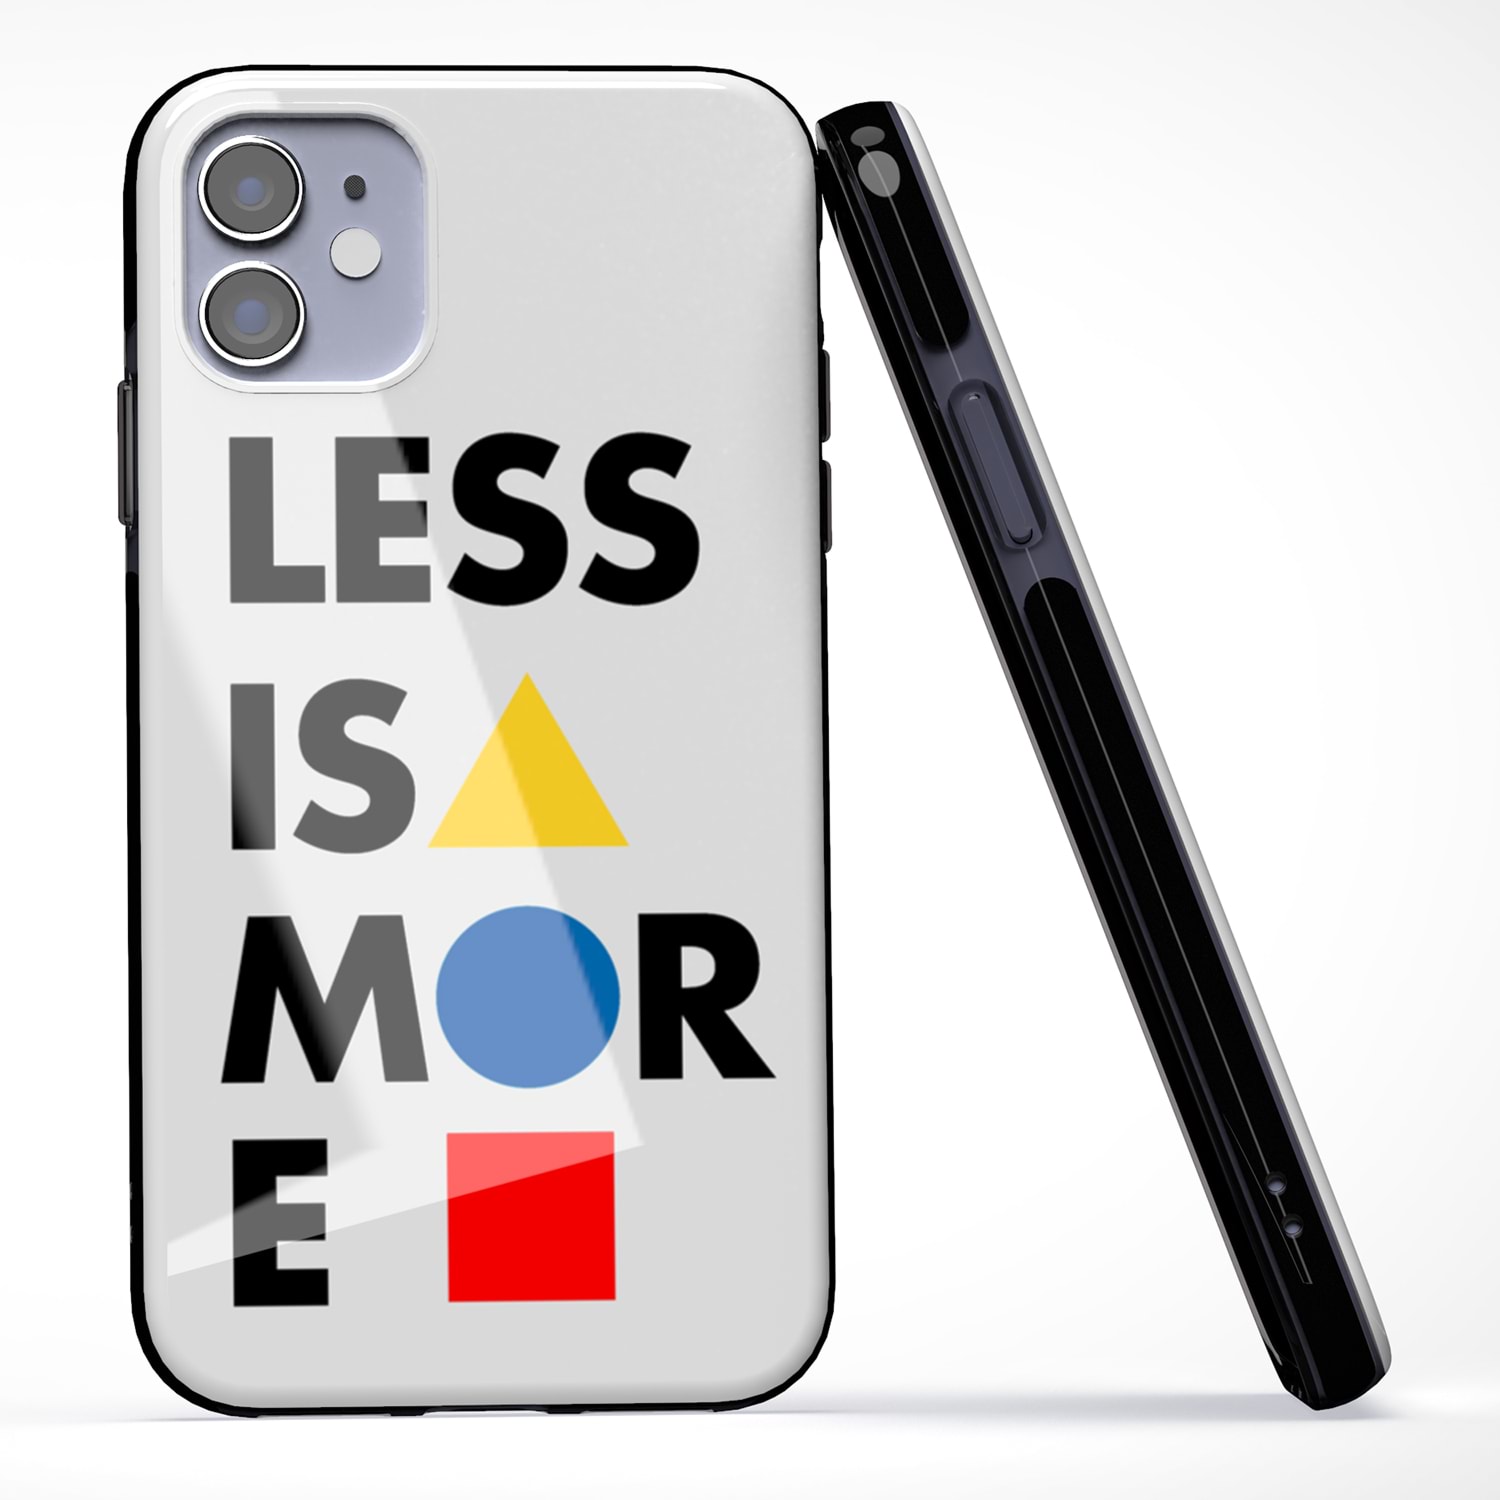 Less is more Telefon Kılıfı resmi